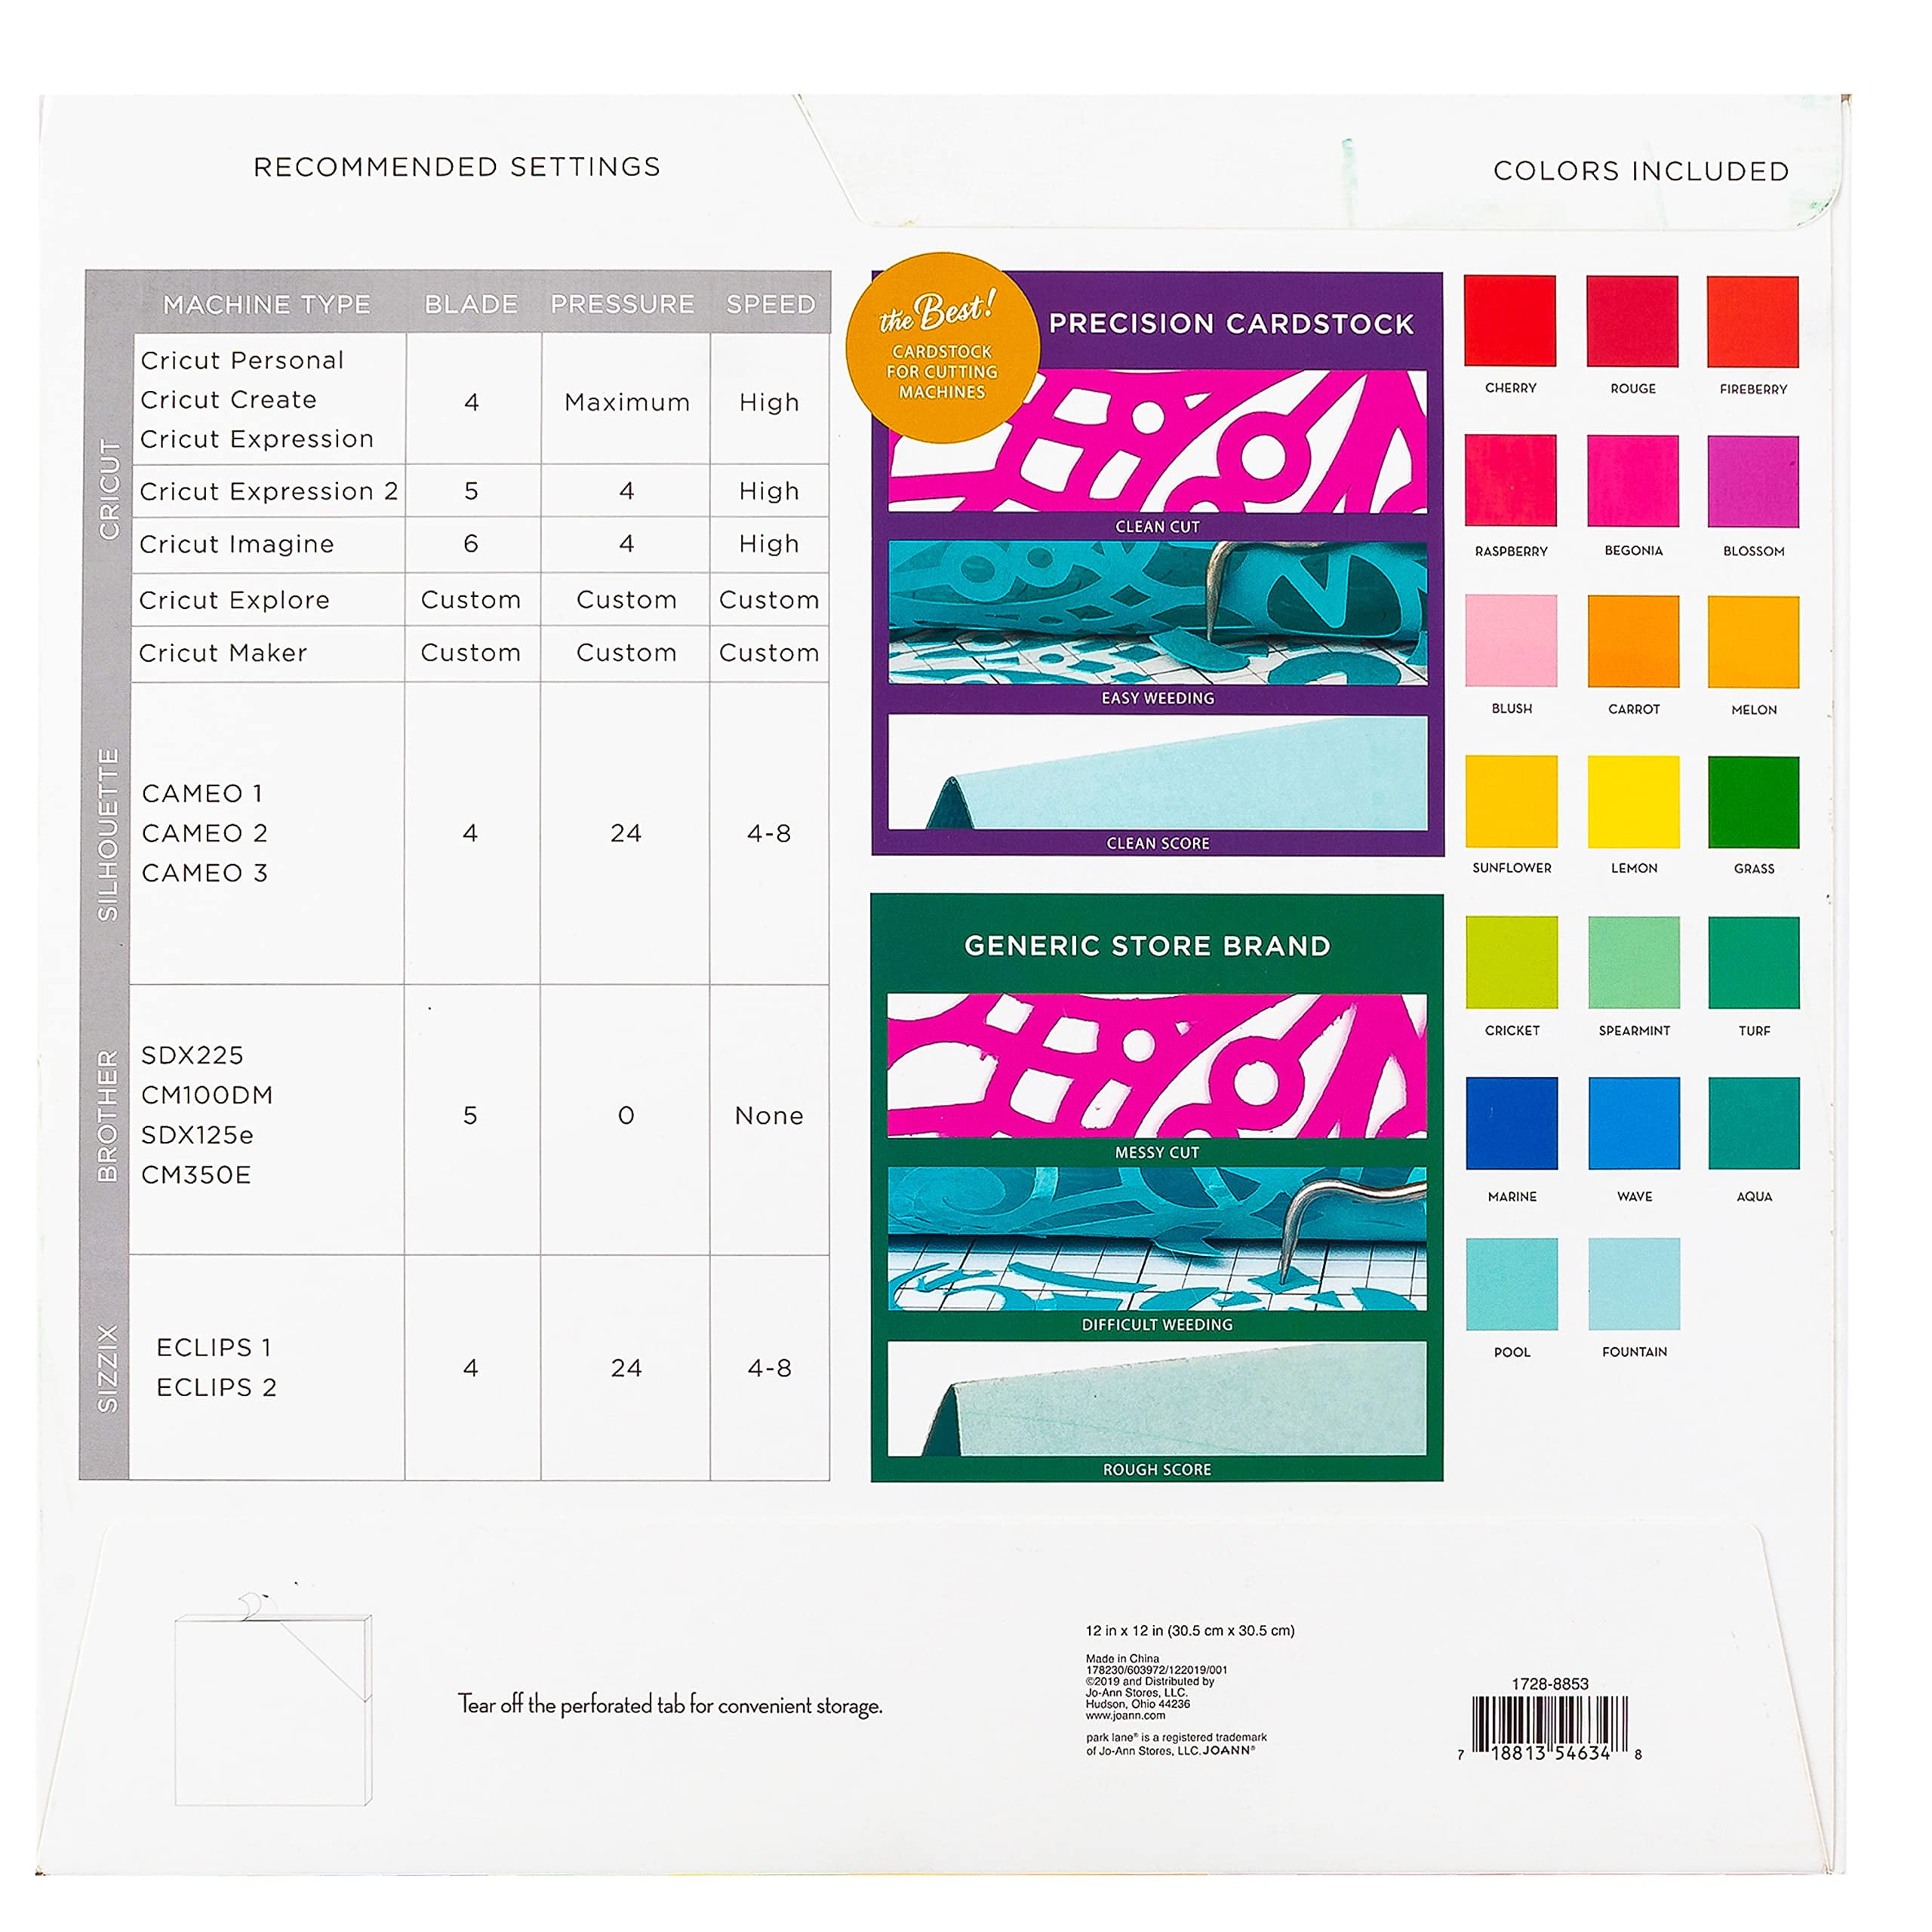 Silhouette Printable Adhesive Cardstock MEDIA-CARD-ADH-3T B&H